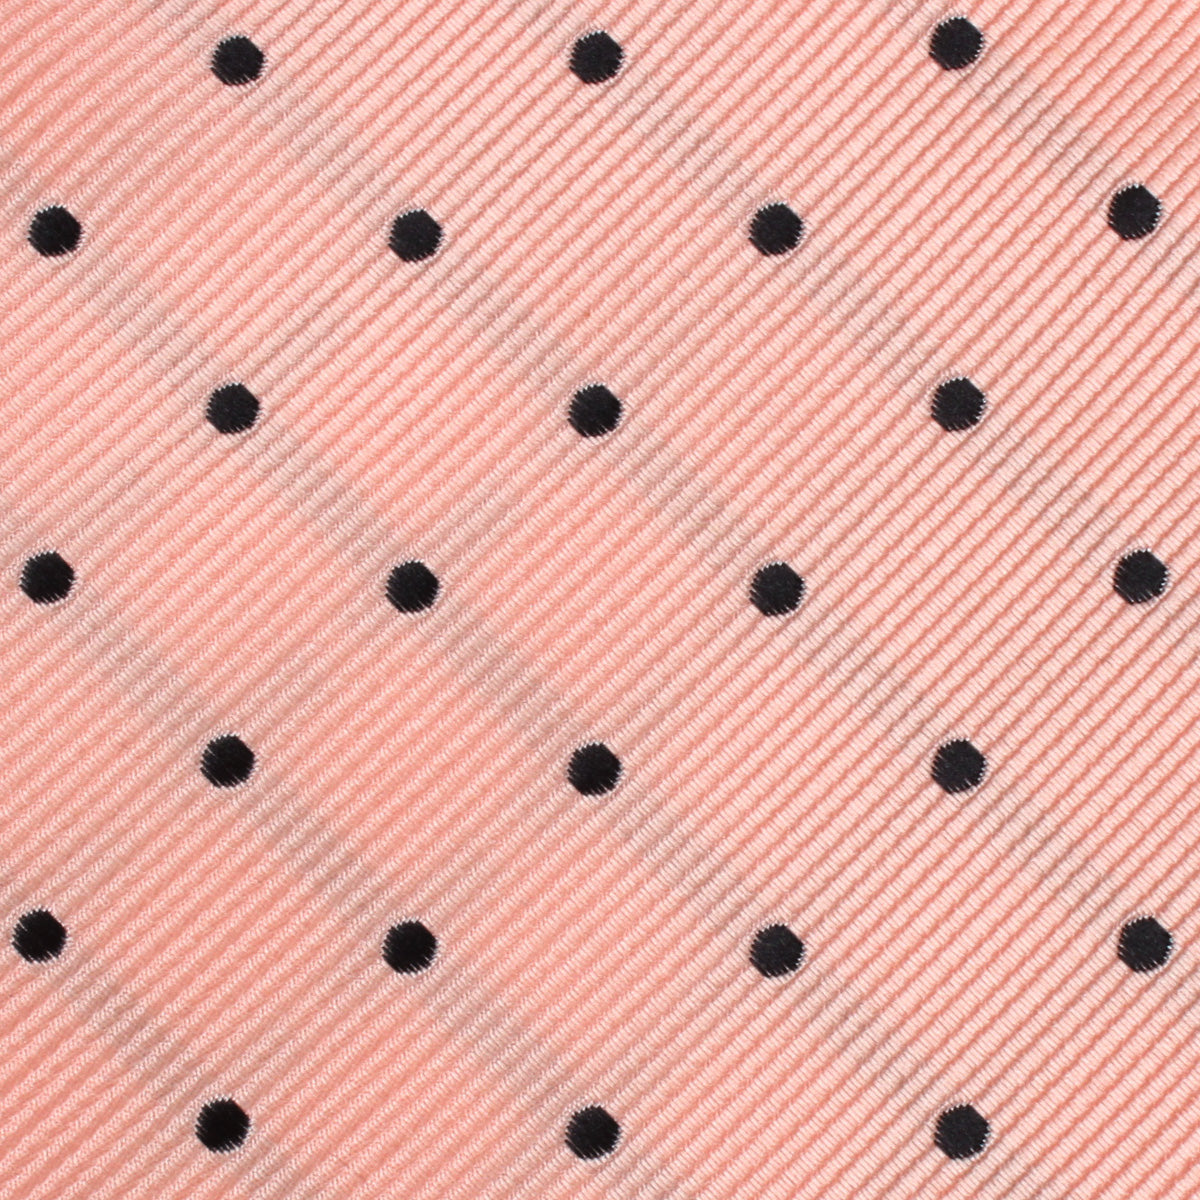 Peach on Black Polka Dots Pocket Square Fabric